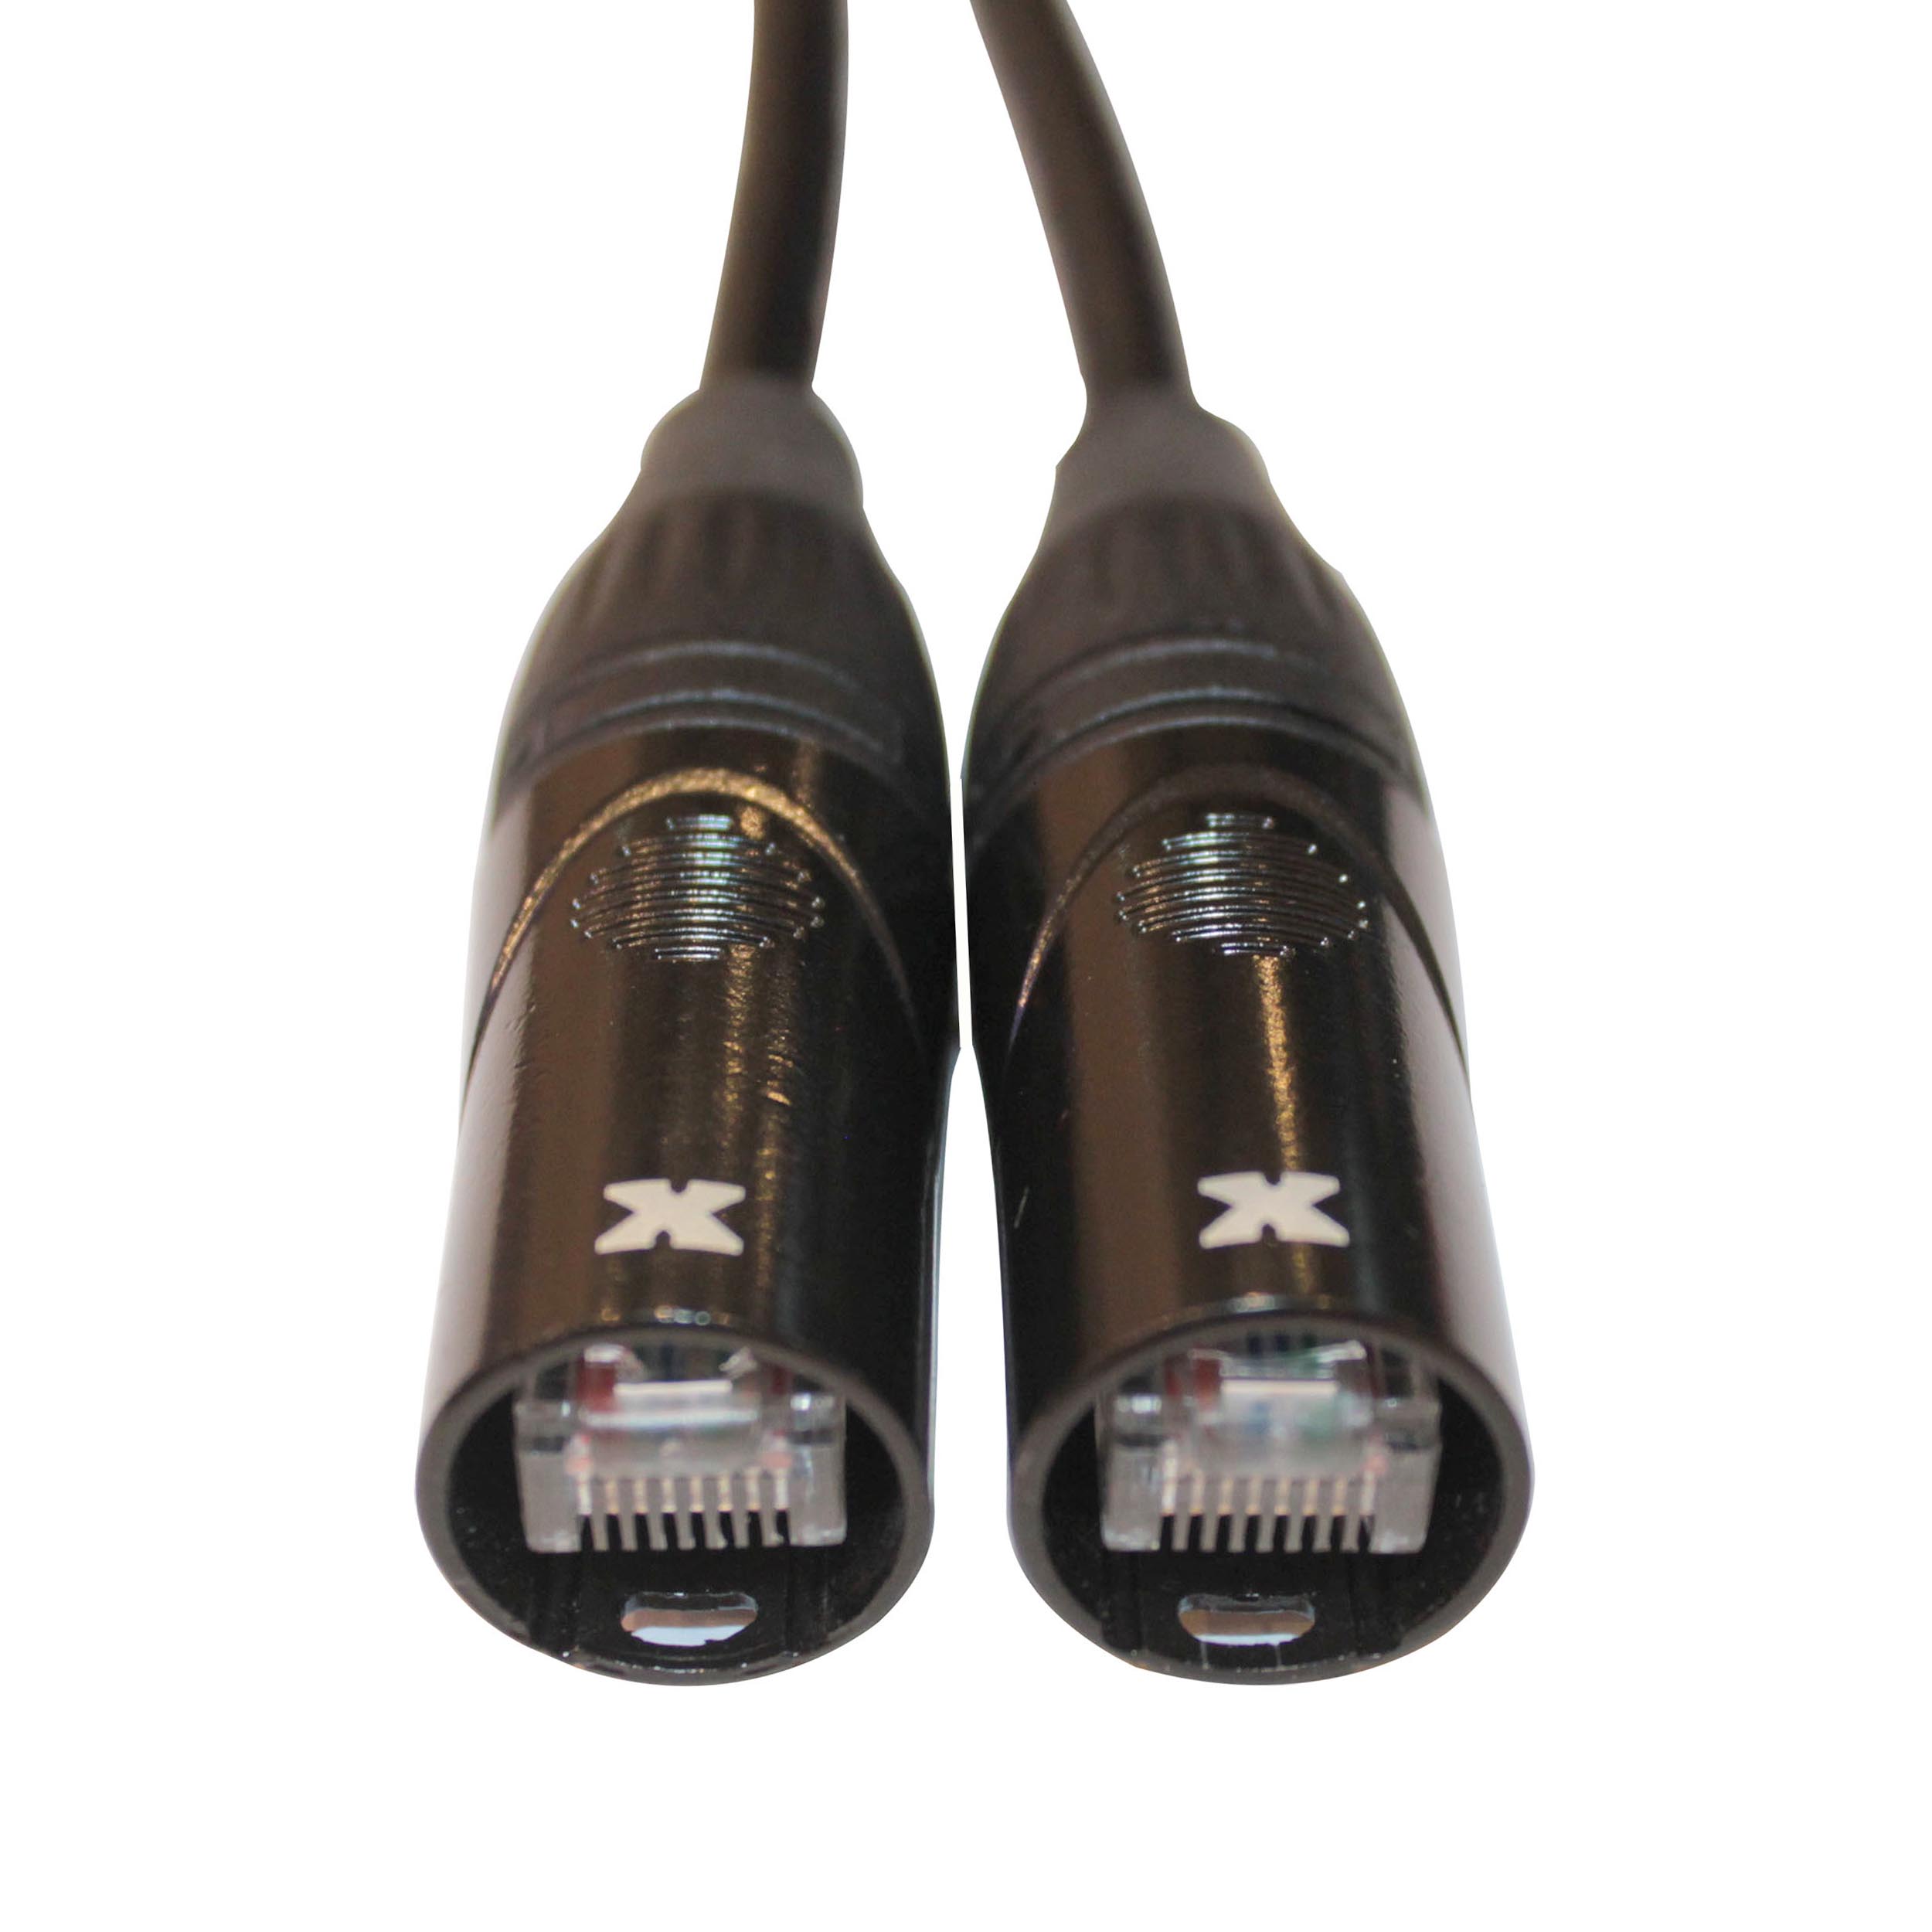 prox-xc-cat6-50-50ft-cat-6-cable.jpg